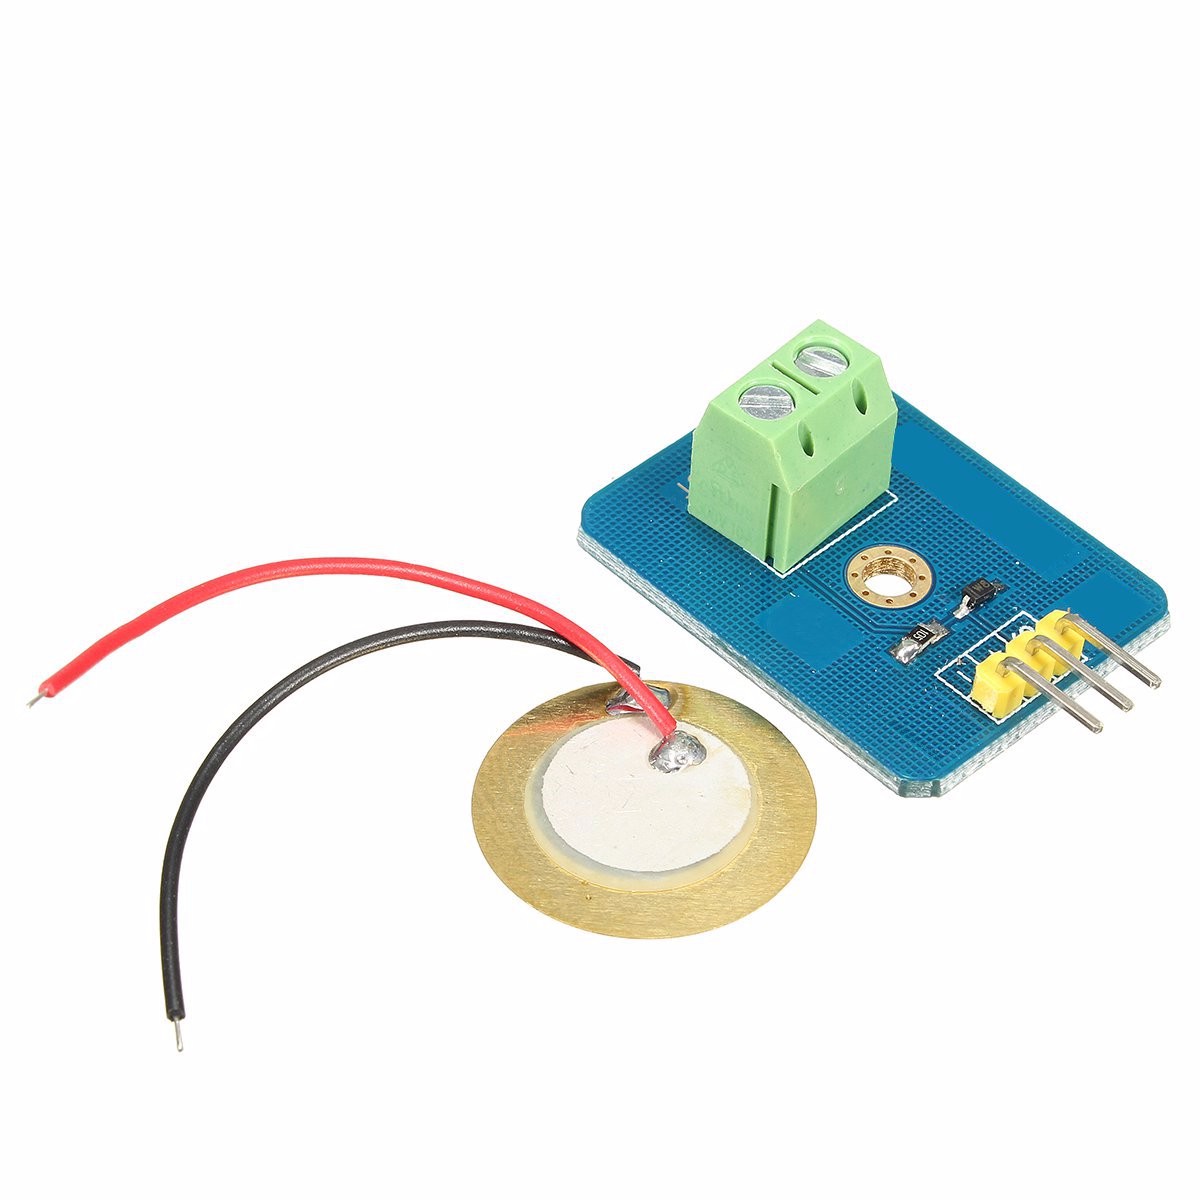 Analog Ceramic Piezo Vibration Sensor Module Piezoelectricity for Arduino UNO